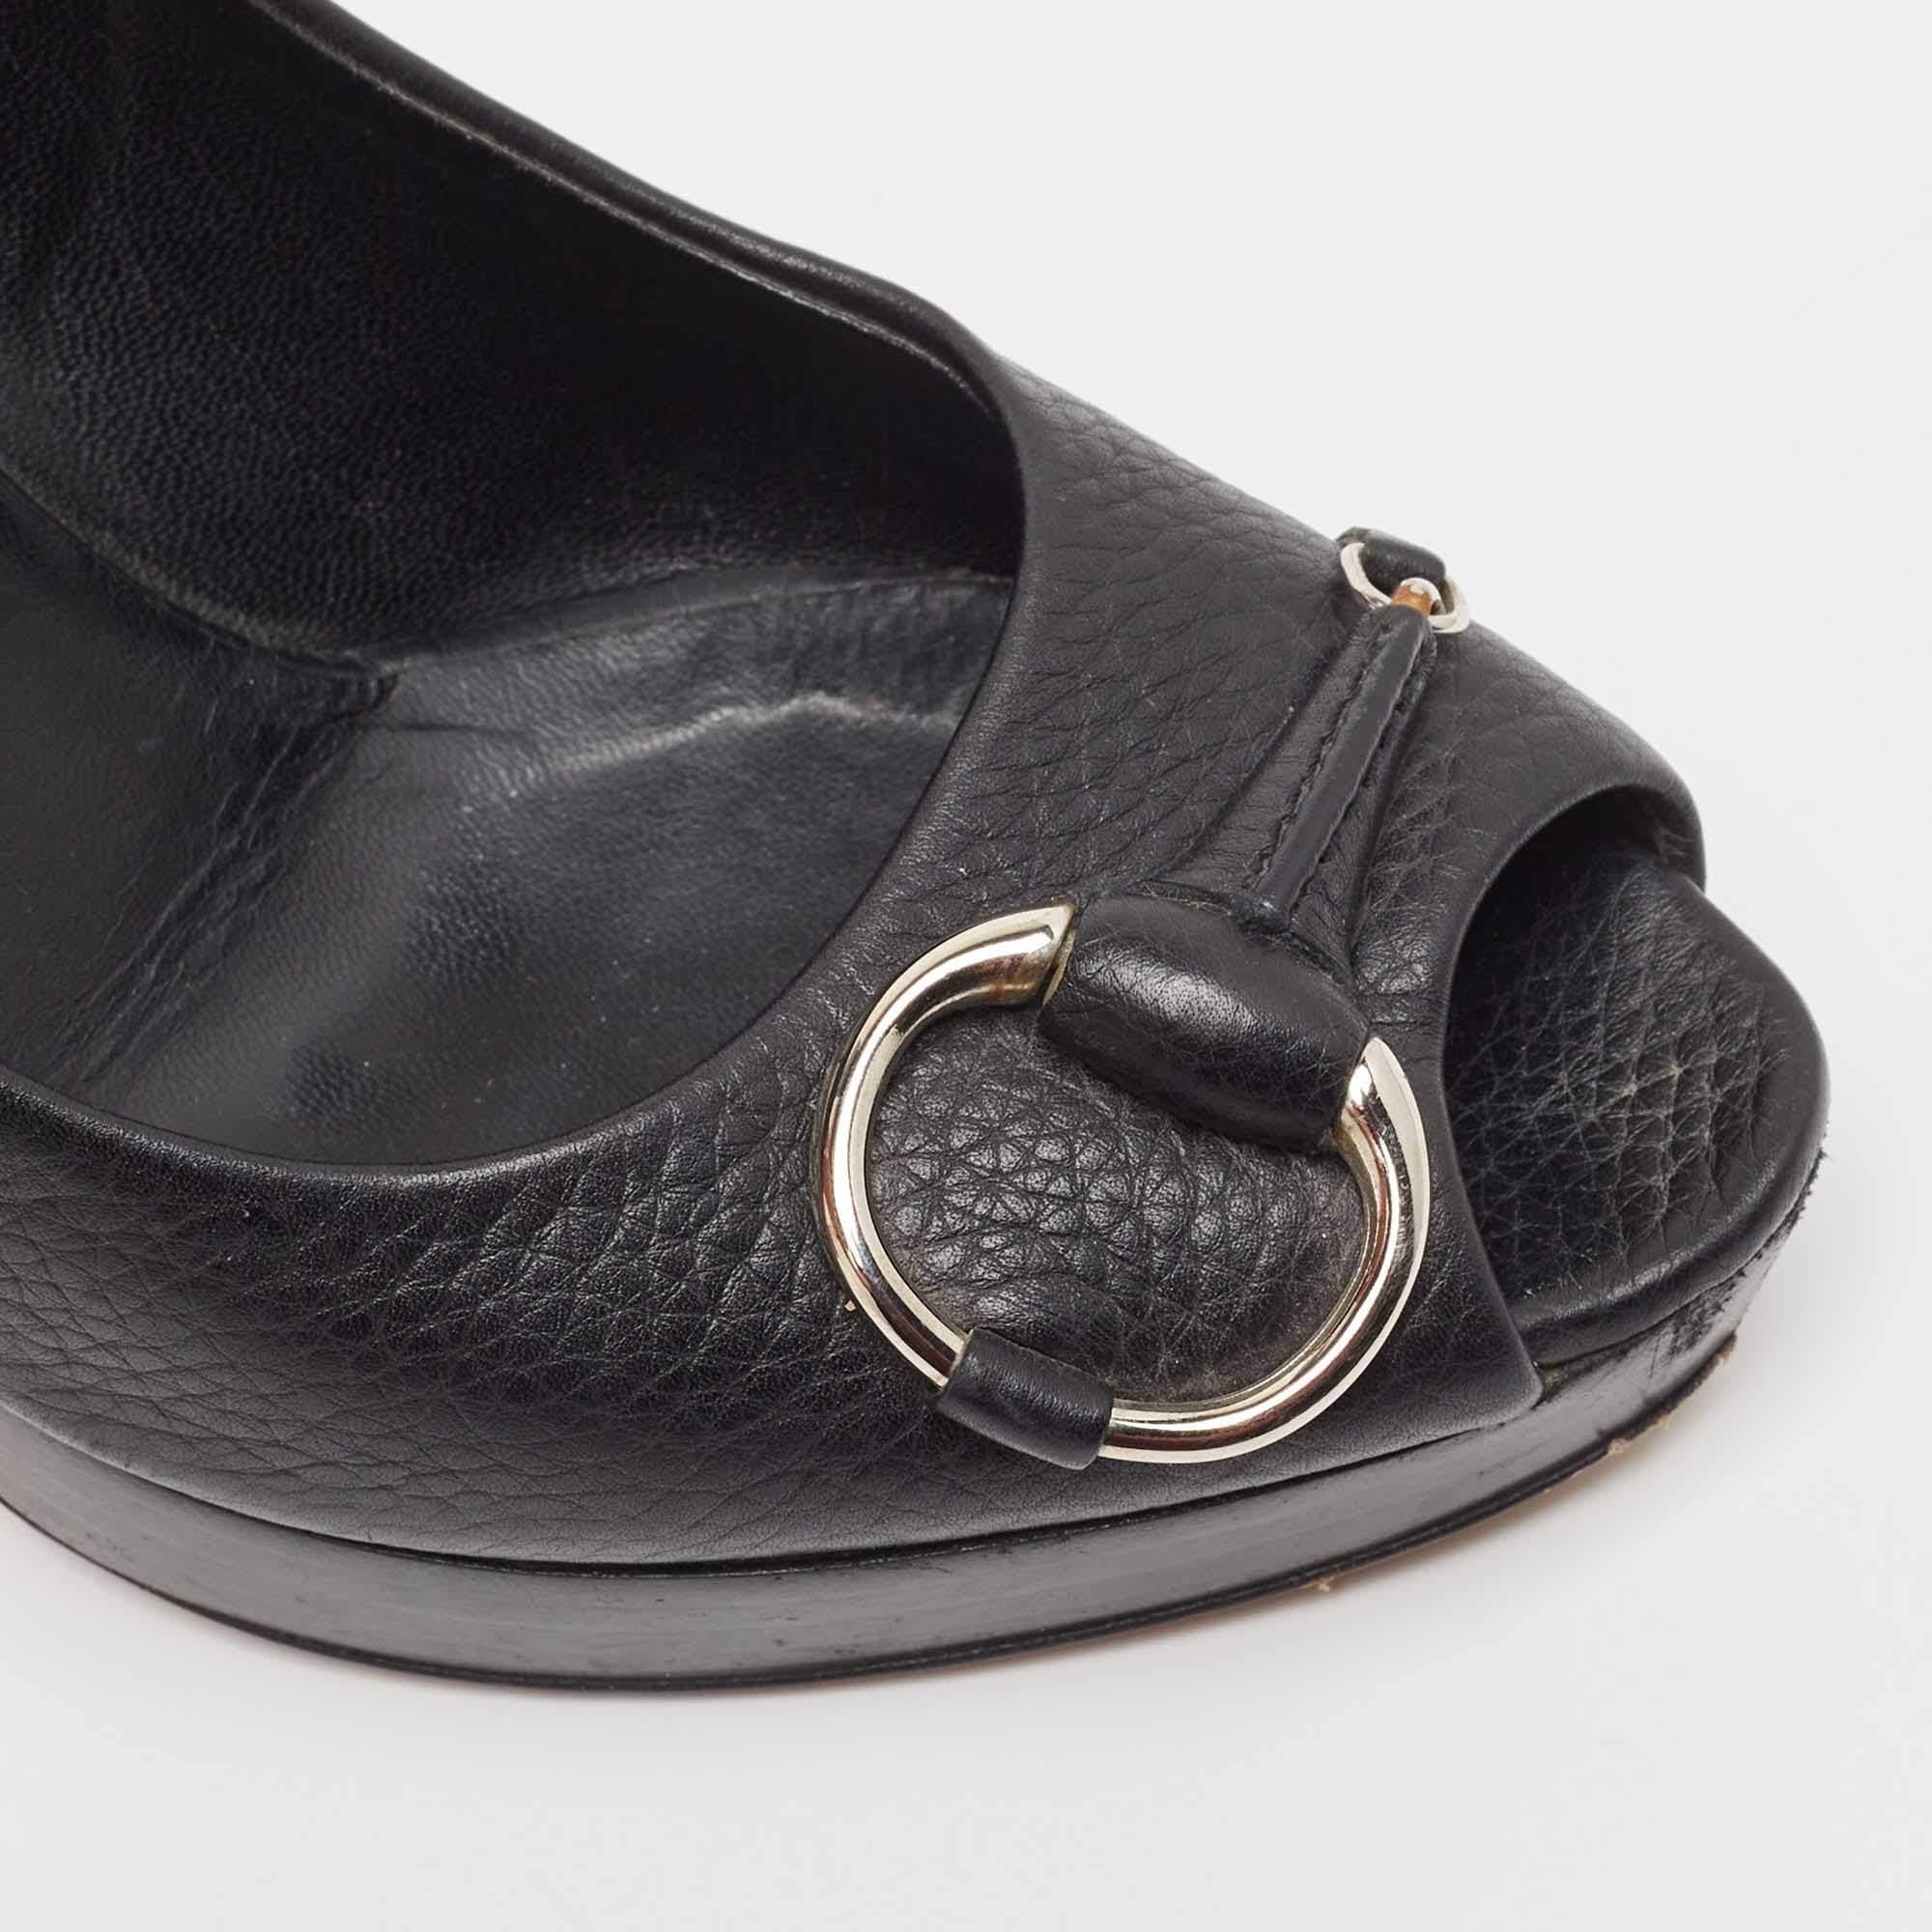 Gucci Black Leather Peep Toe Pumps Size 37 2